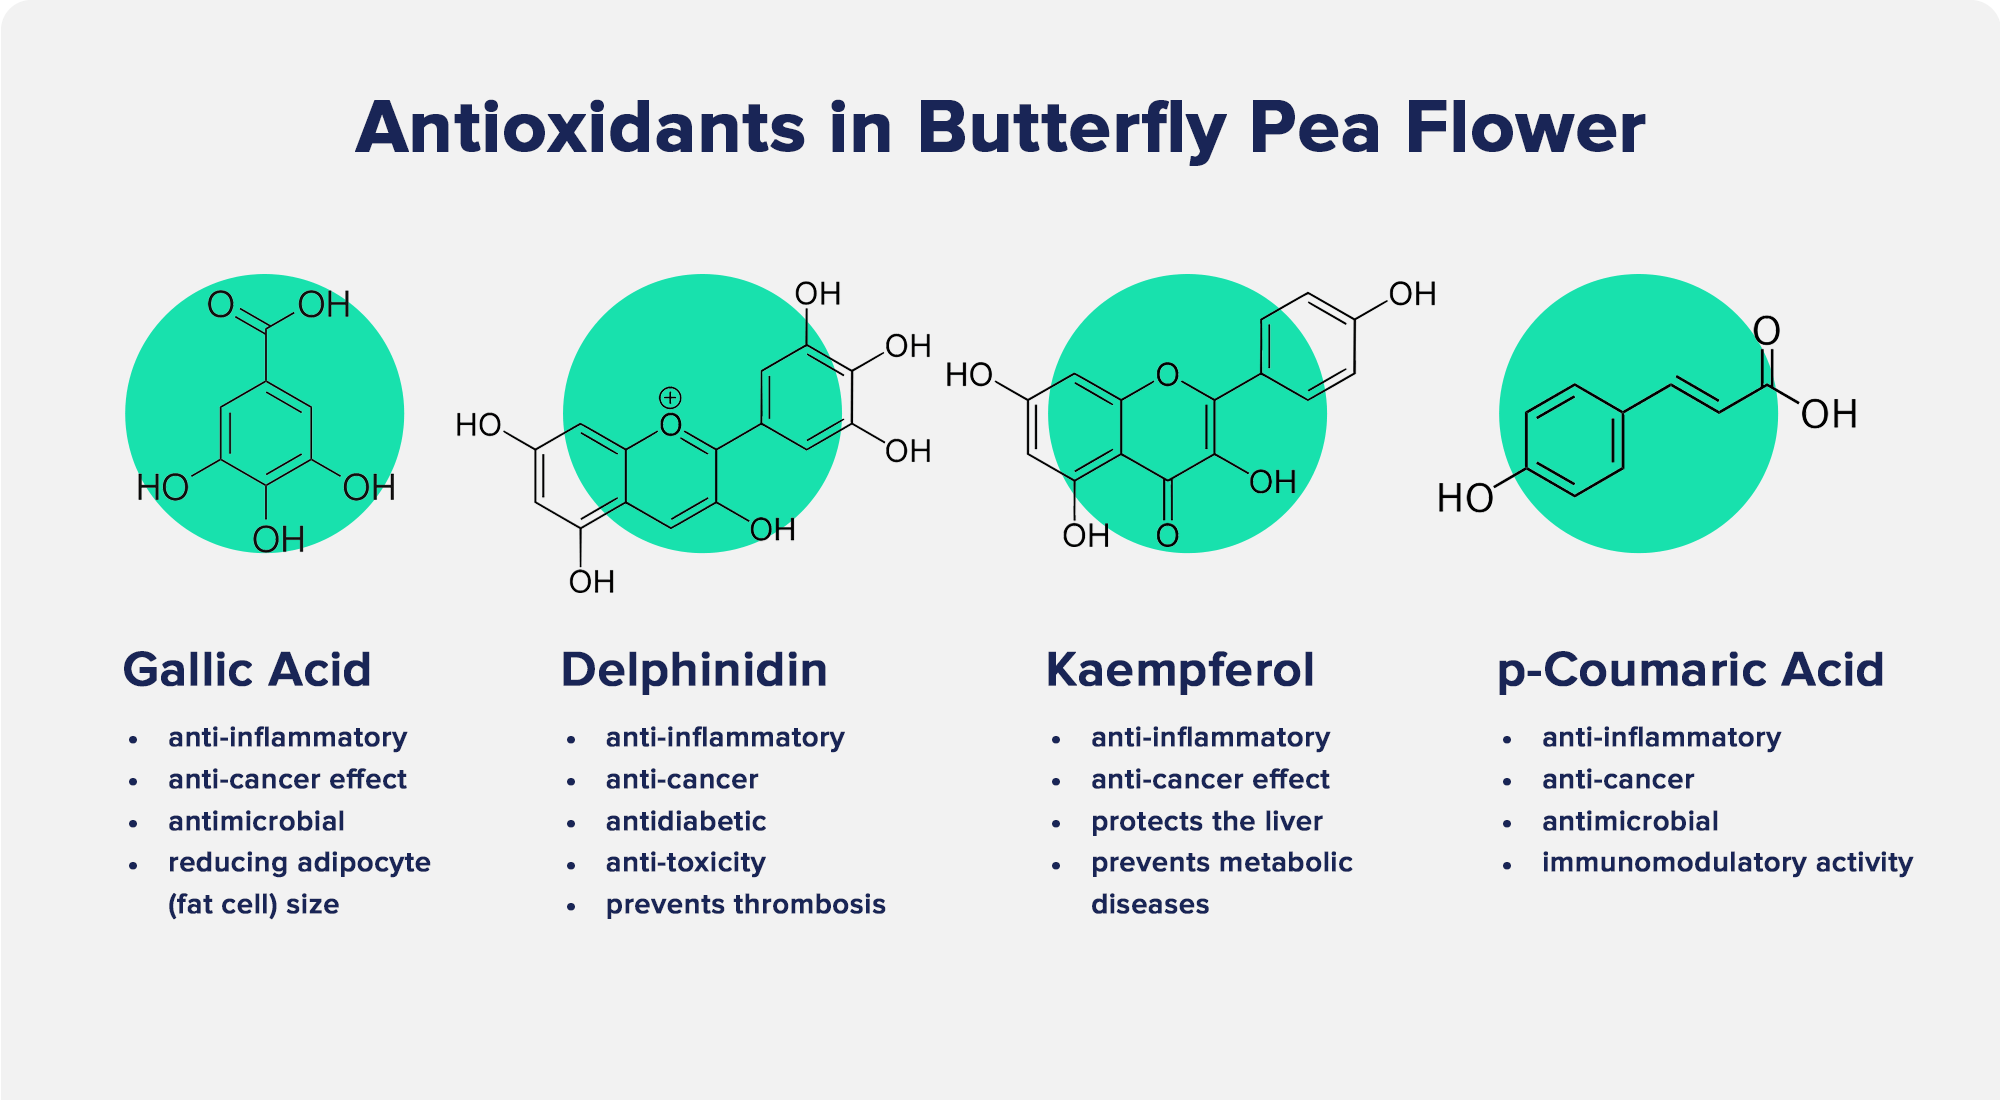 Antioxidants in Butterfly Pea FlowerGallic Acid, Delphinidin, Kaempferol, and p-Coumaric Acid